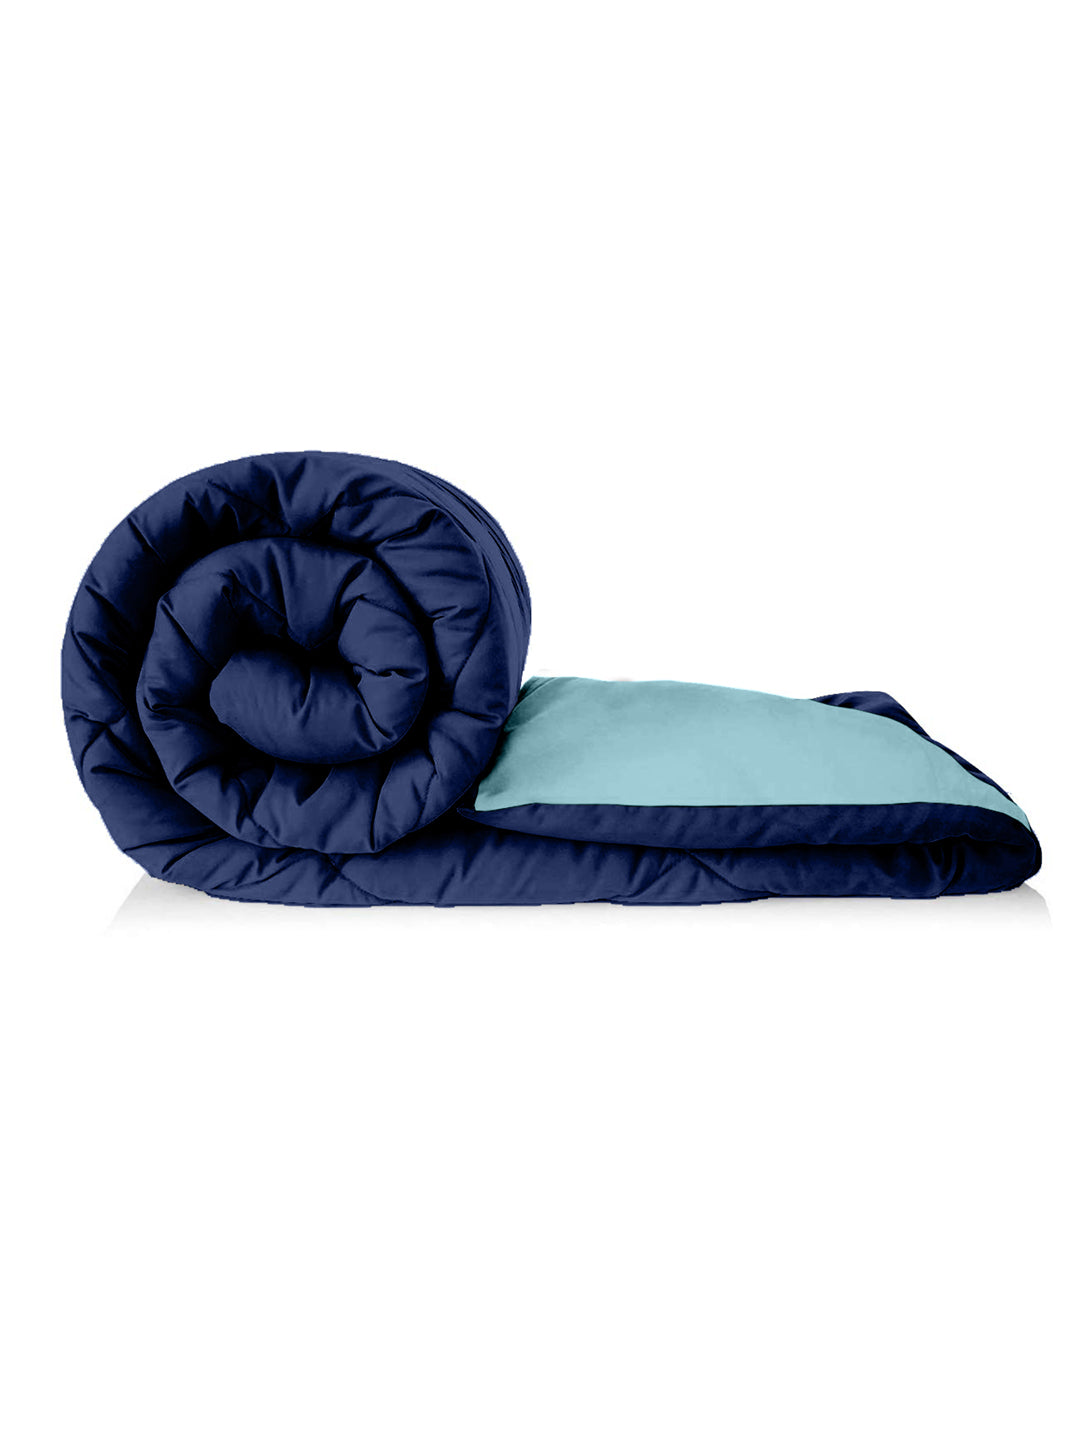 Blue Microfiber Double comforter for Mild Winter